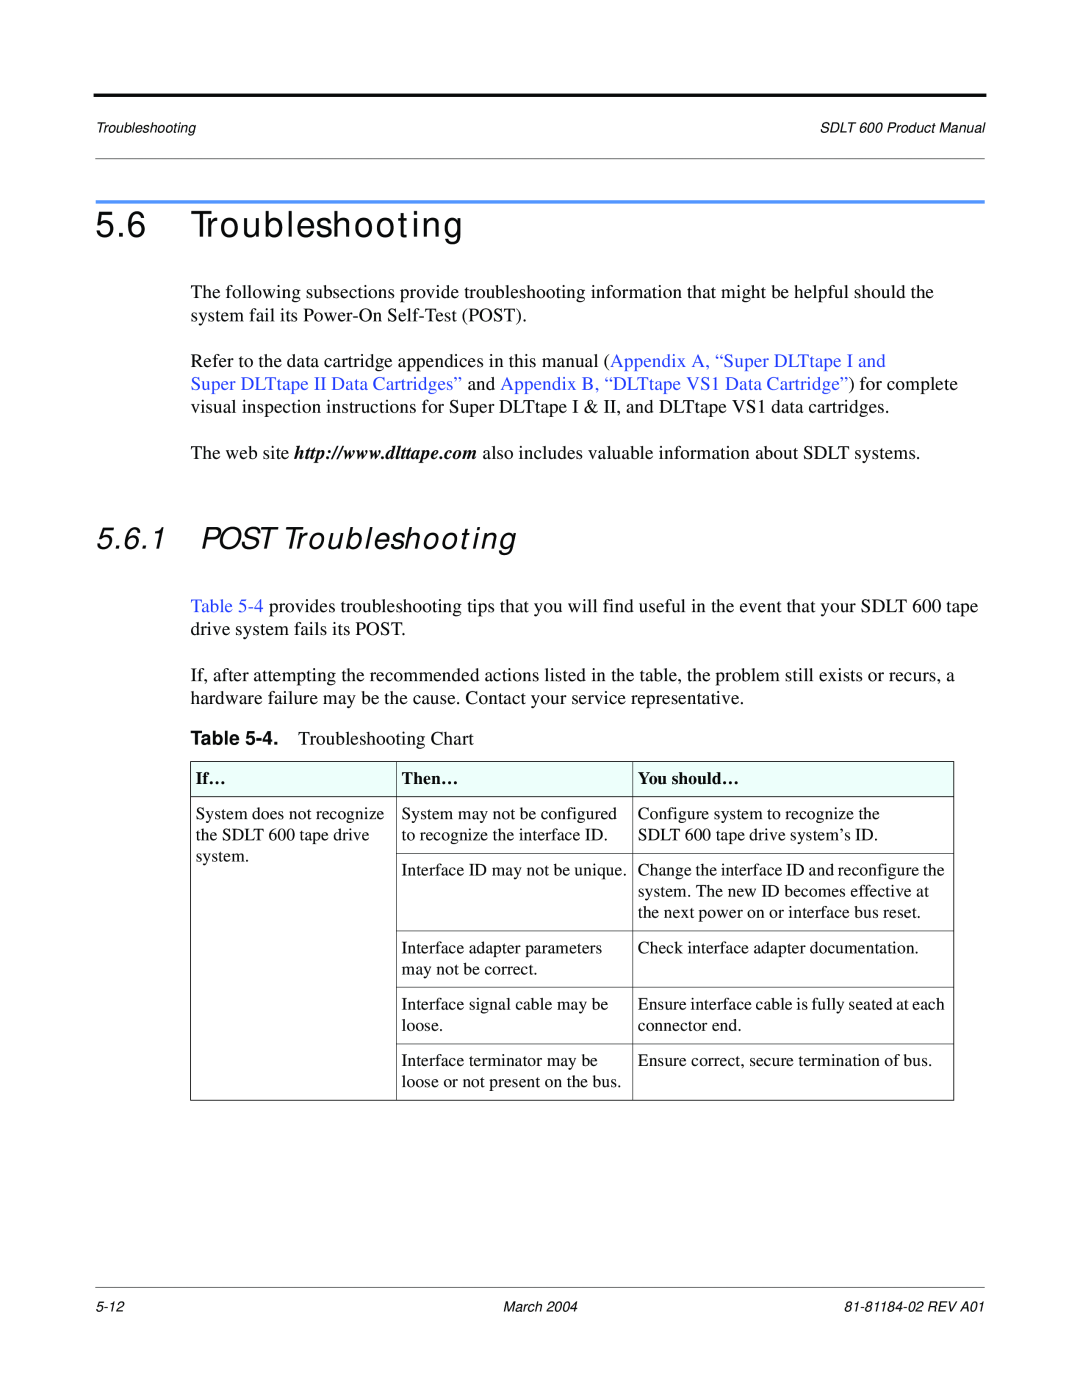 Tandberg Data 600 manual POST Troubleshooting 